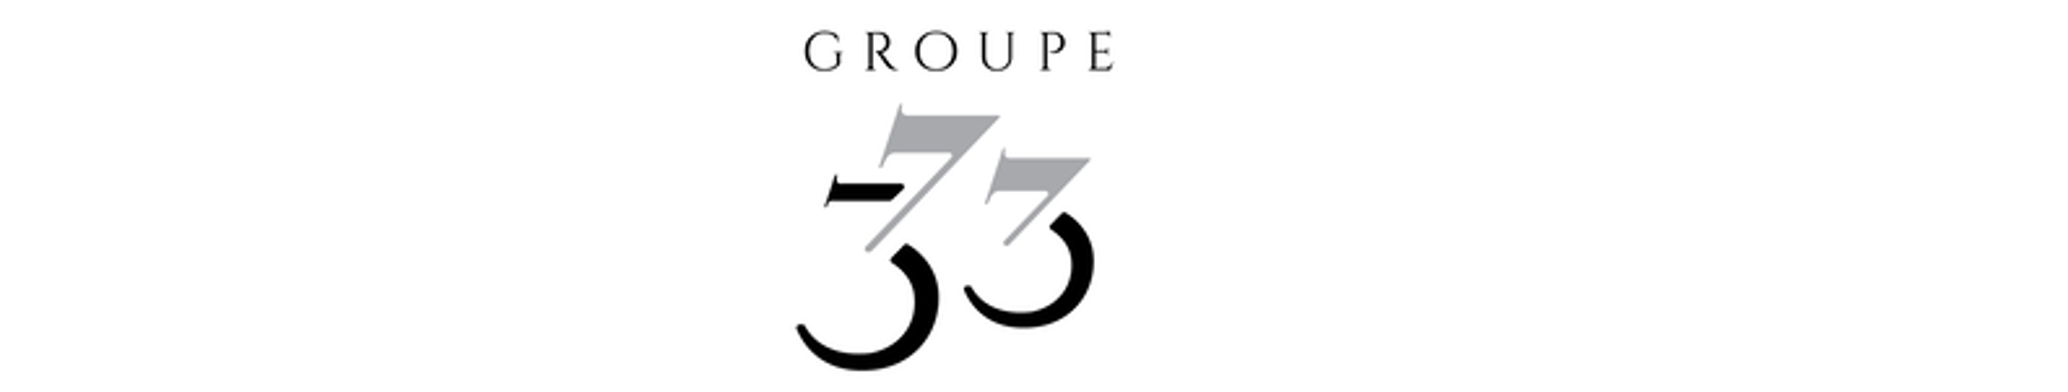 Groupe 33